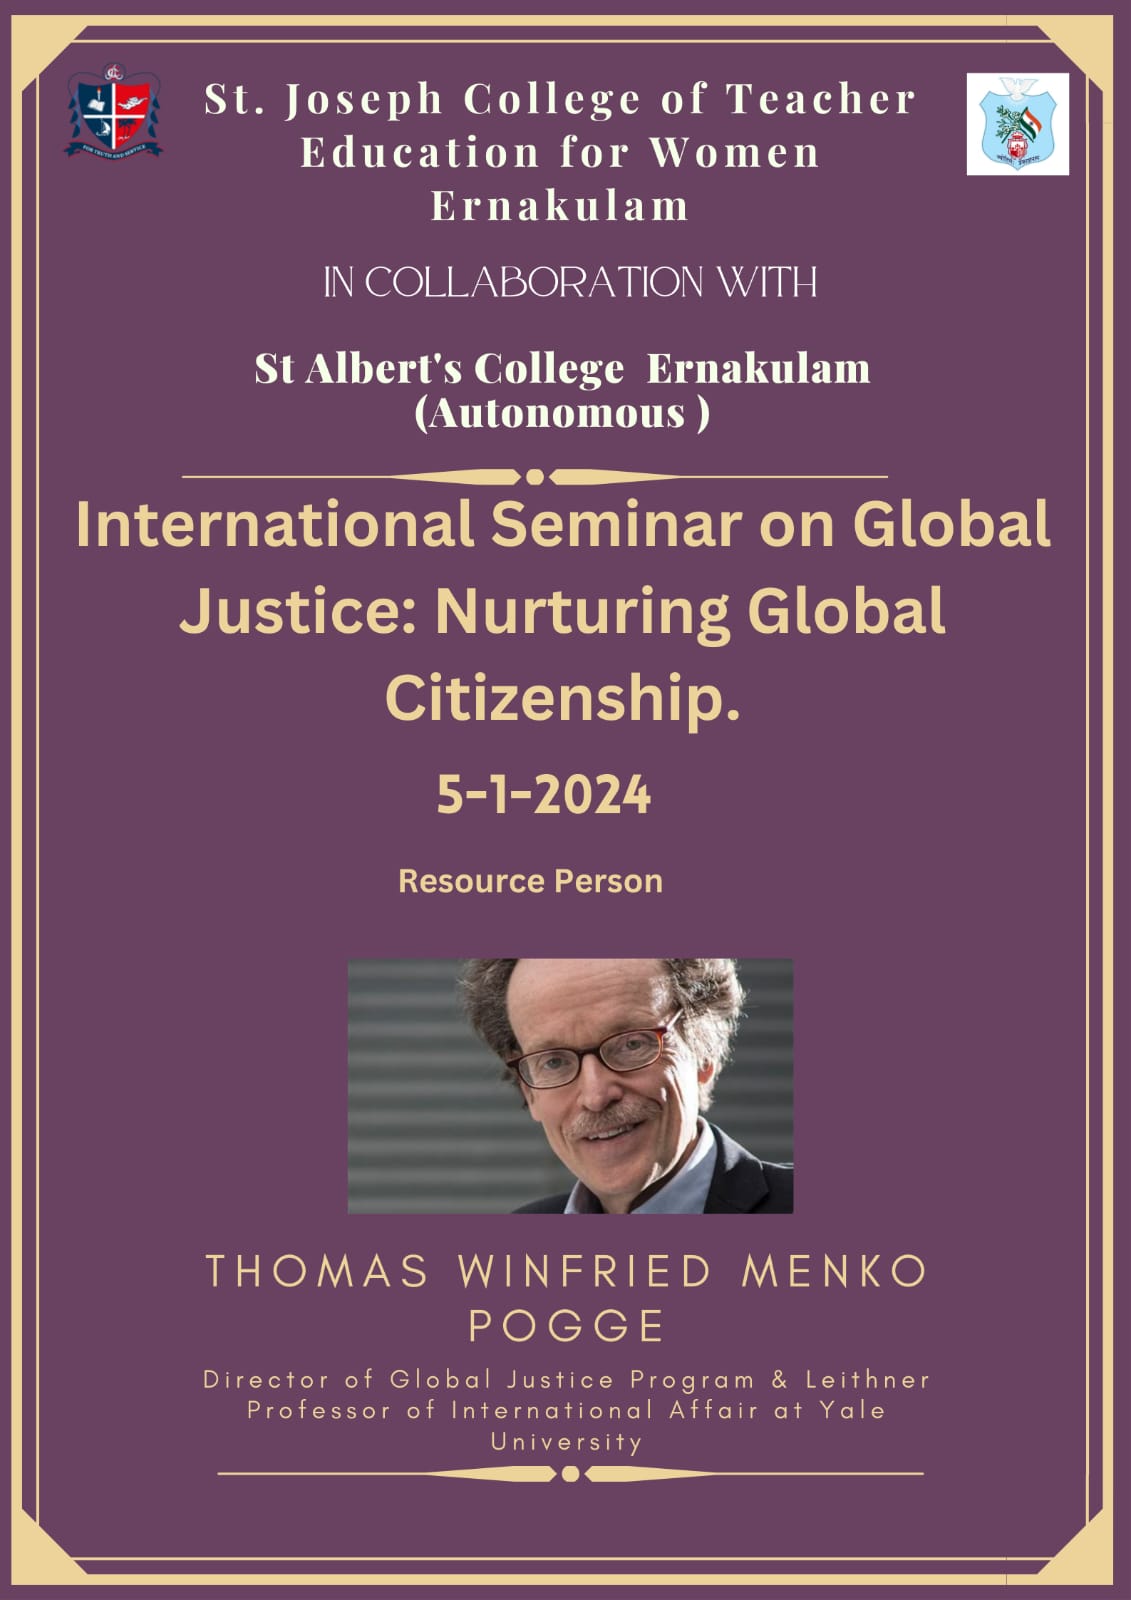 International Seminar on Global Justice: Nurturing Global Citizenship.